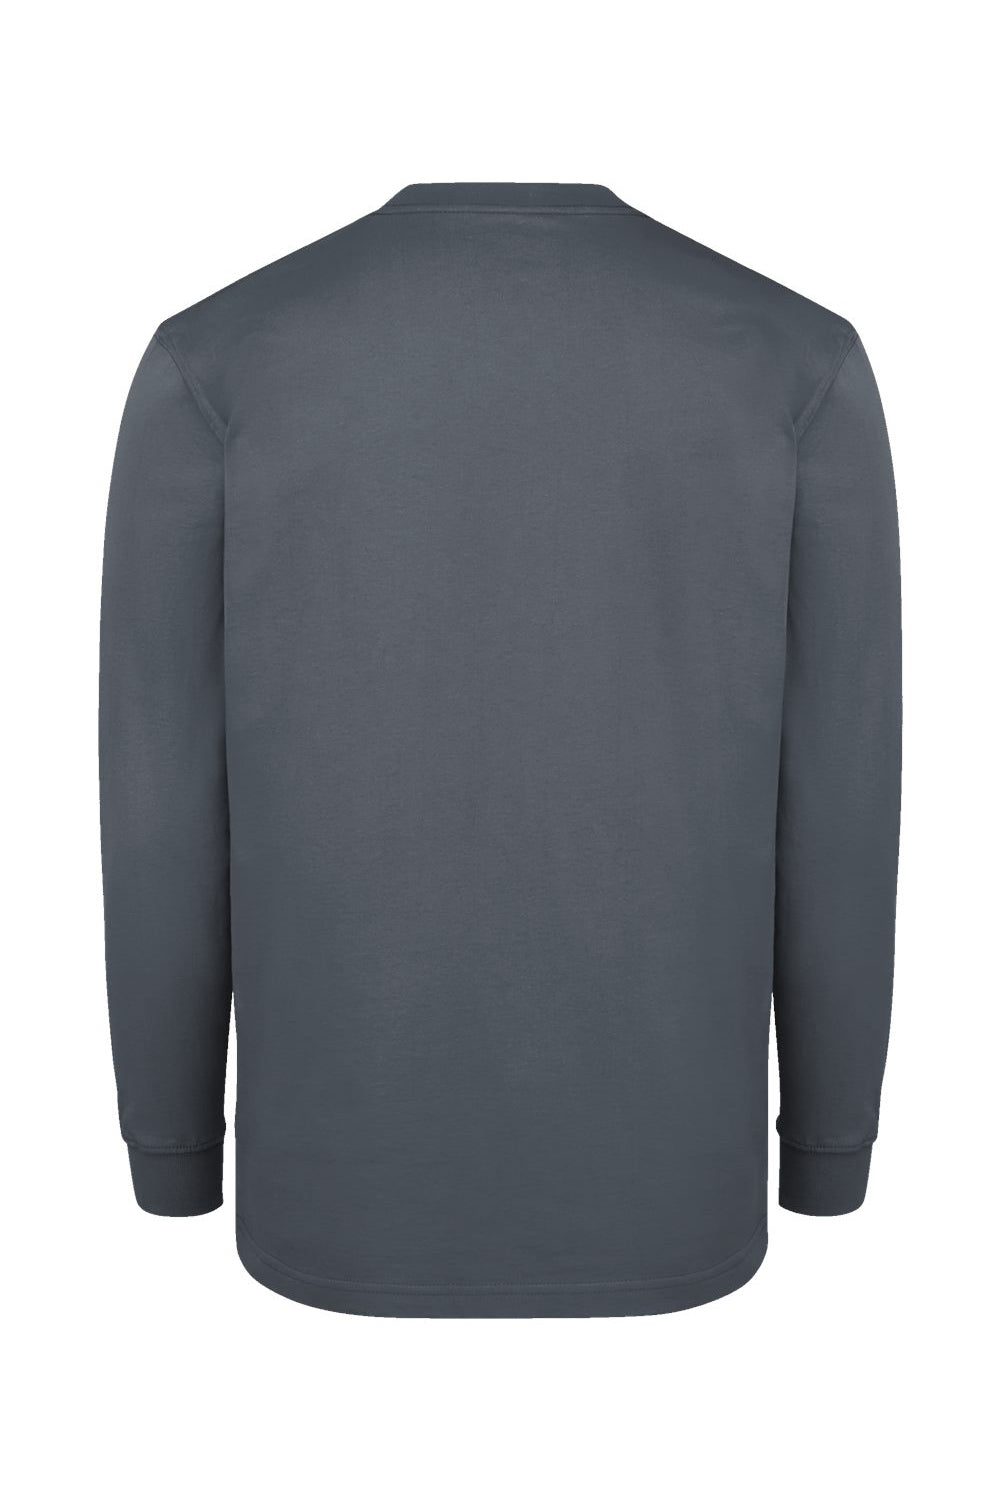 Dickies WL50 Mens Long Sleeve Crewneck T-Shirt w/ Pocket Charcoal Grey Flat Back